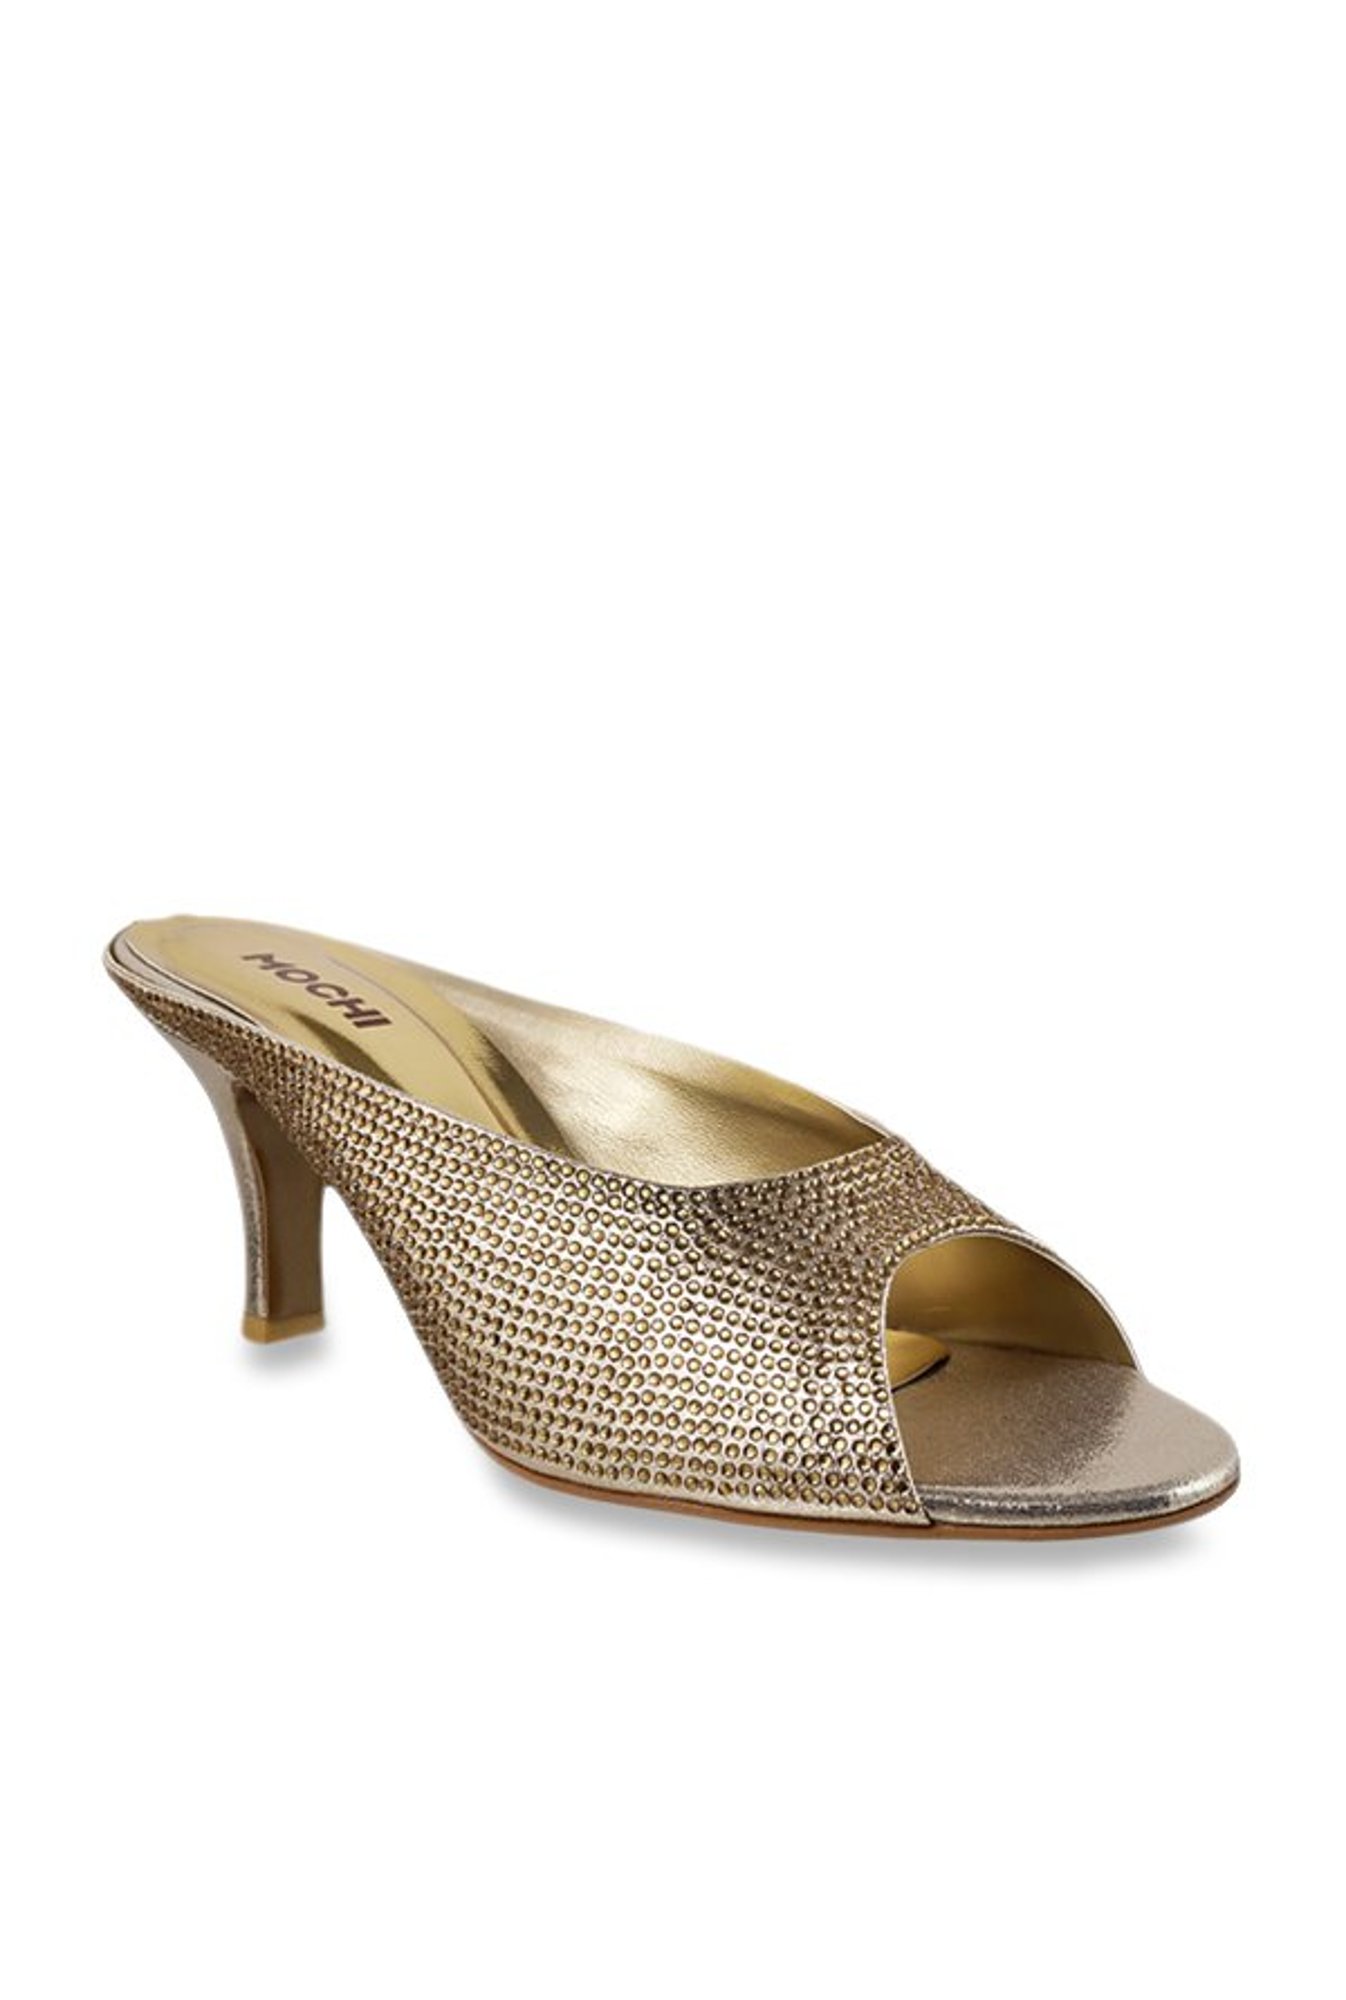 Buy Bronze Heeled Sandals for Women by Mochi Online | Ajio.com